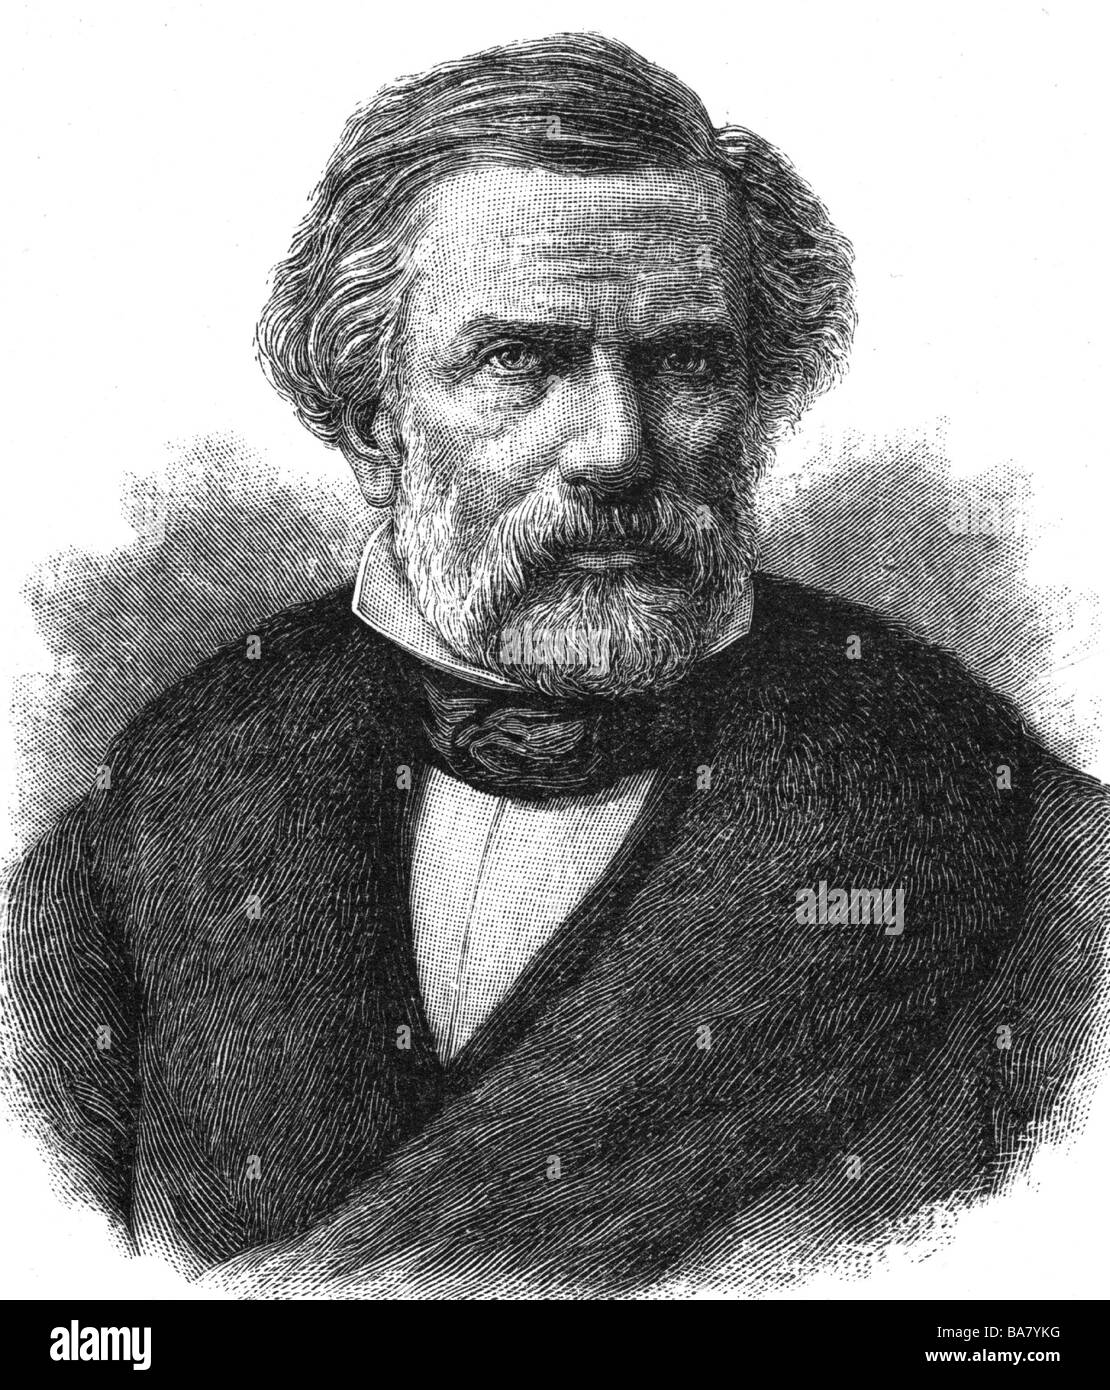 Thomas, Ambroise, 5.8.1811 - 12.2.1896, French opera composer, portrait, wood engraving, 19th century, Stock Photo